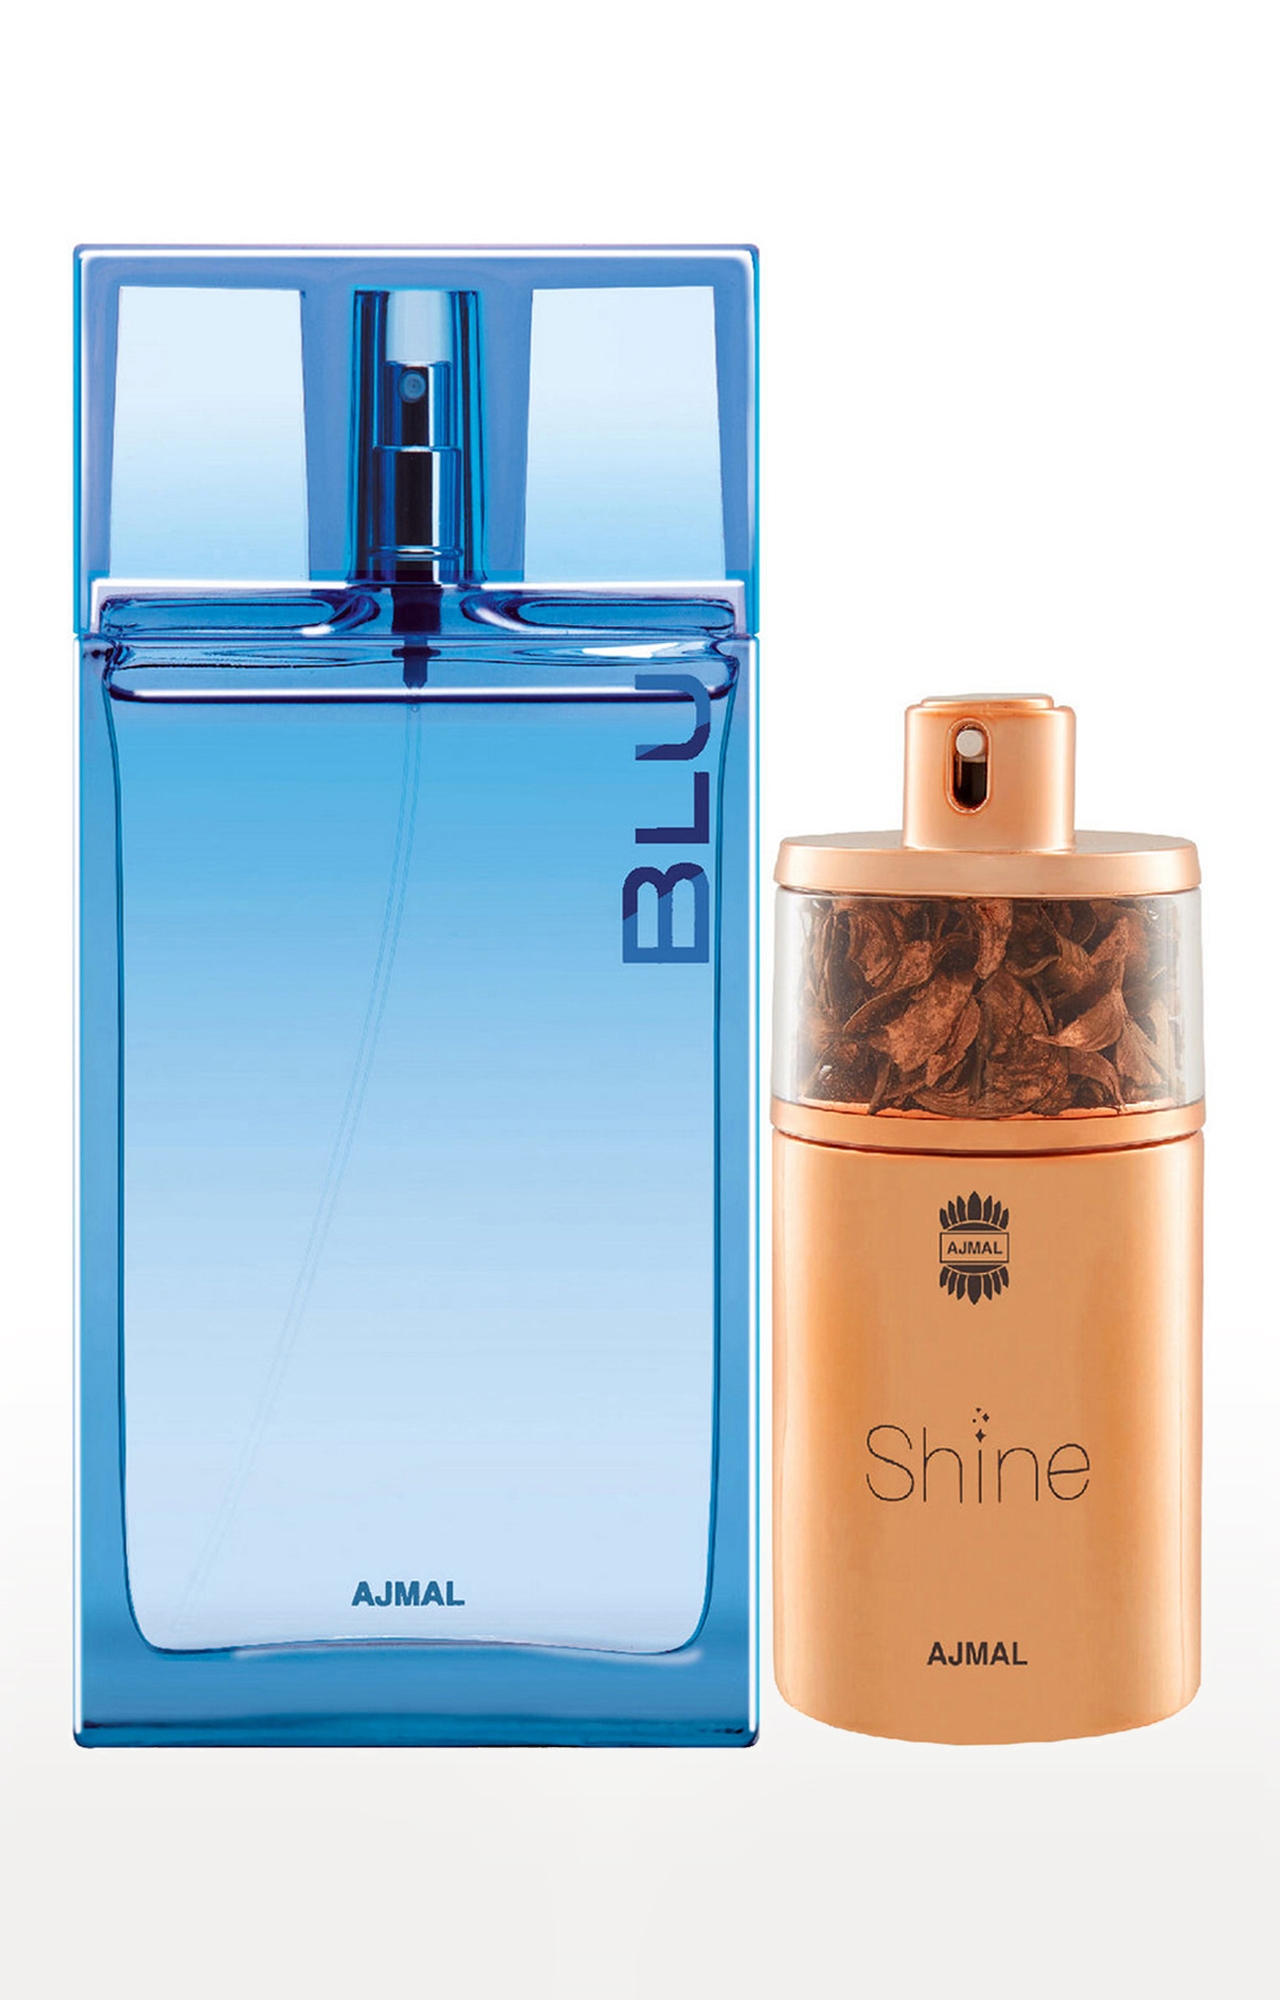 Ajmal | Ajmal Blu EDP Aquatic Perfume 90ml for Men and Shine EDP Perfume 75ml for Women 0